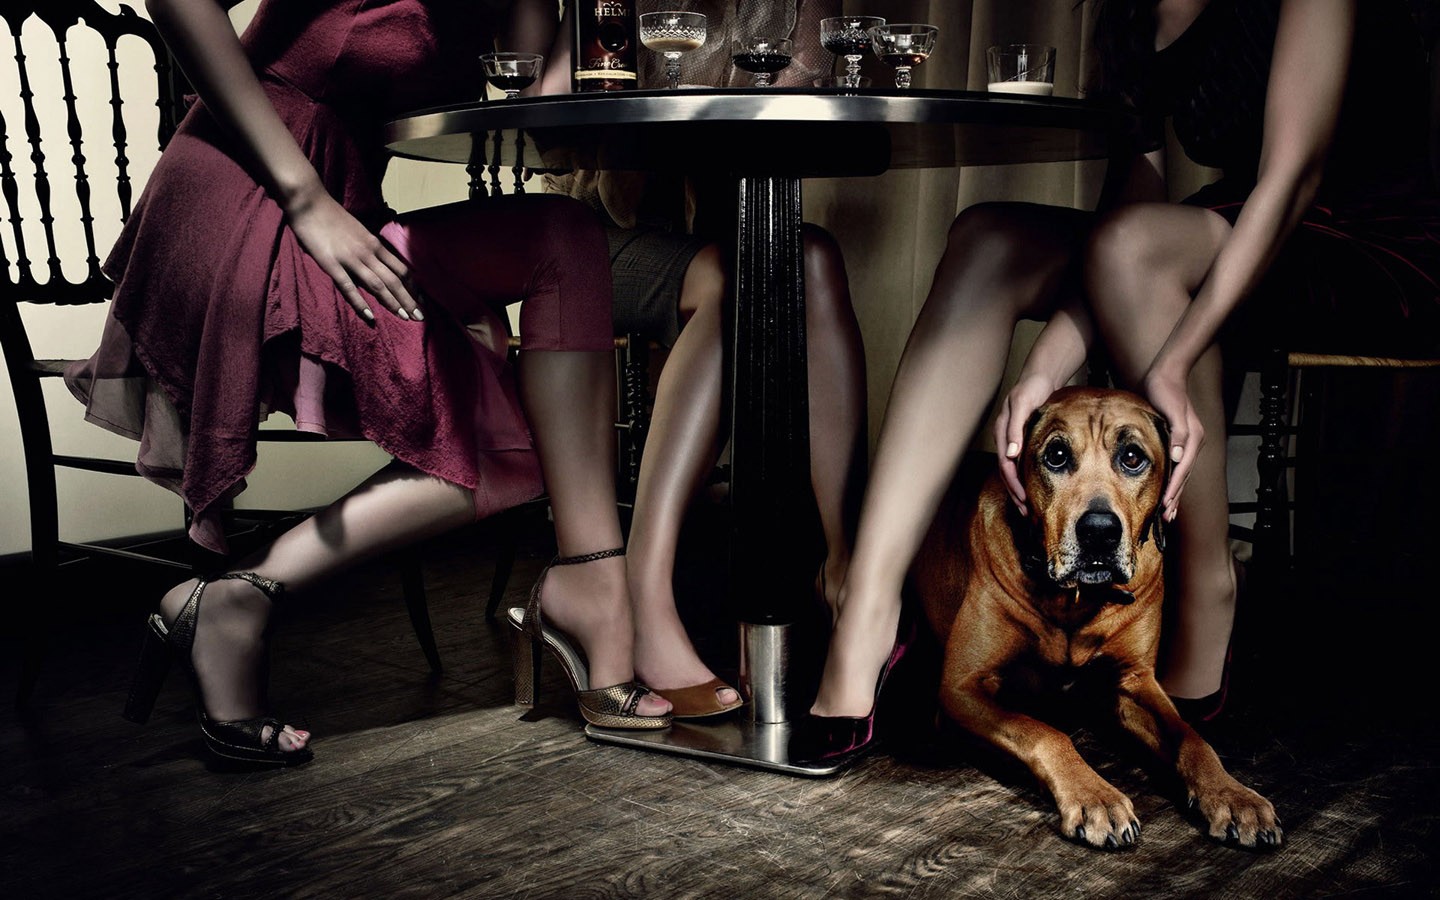 People 1440x900 humor dog women table legs dress high heels drinking glass animals mammals heels